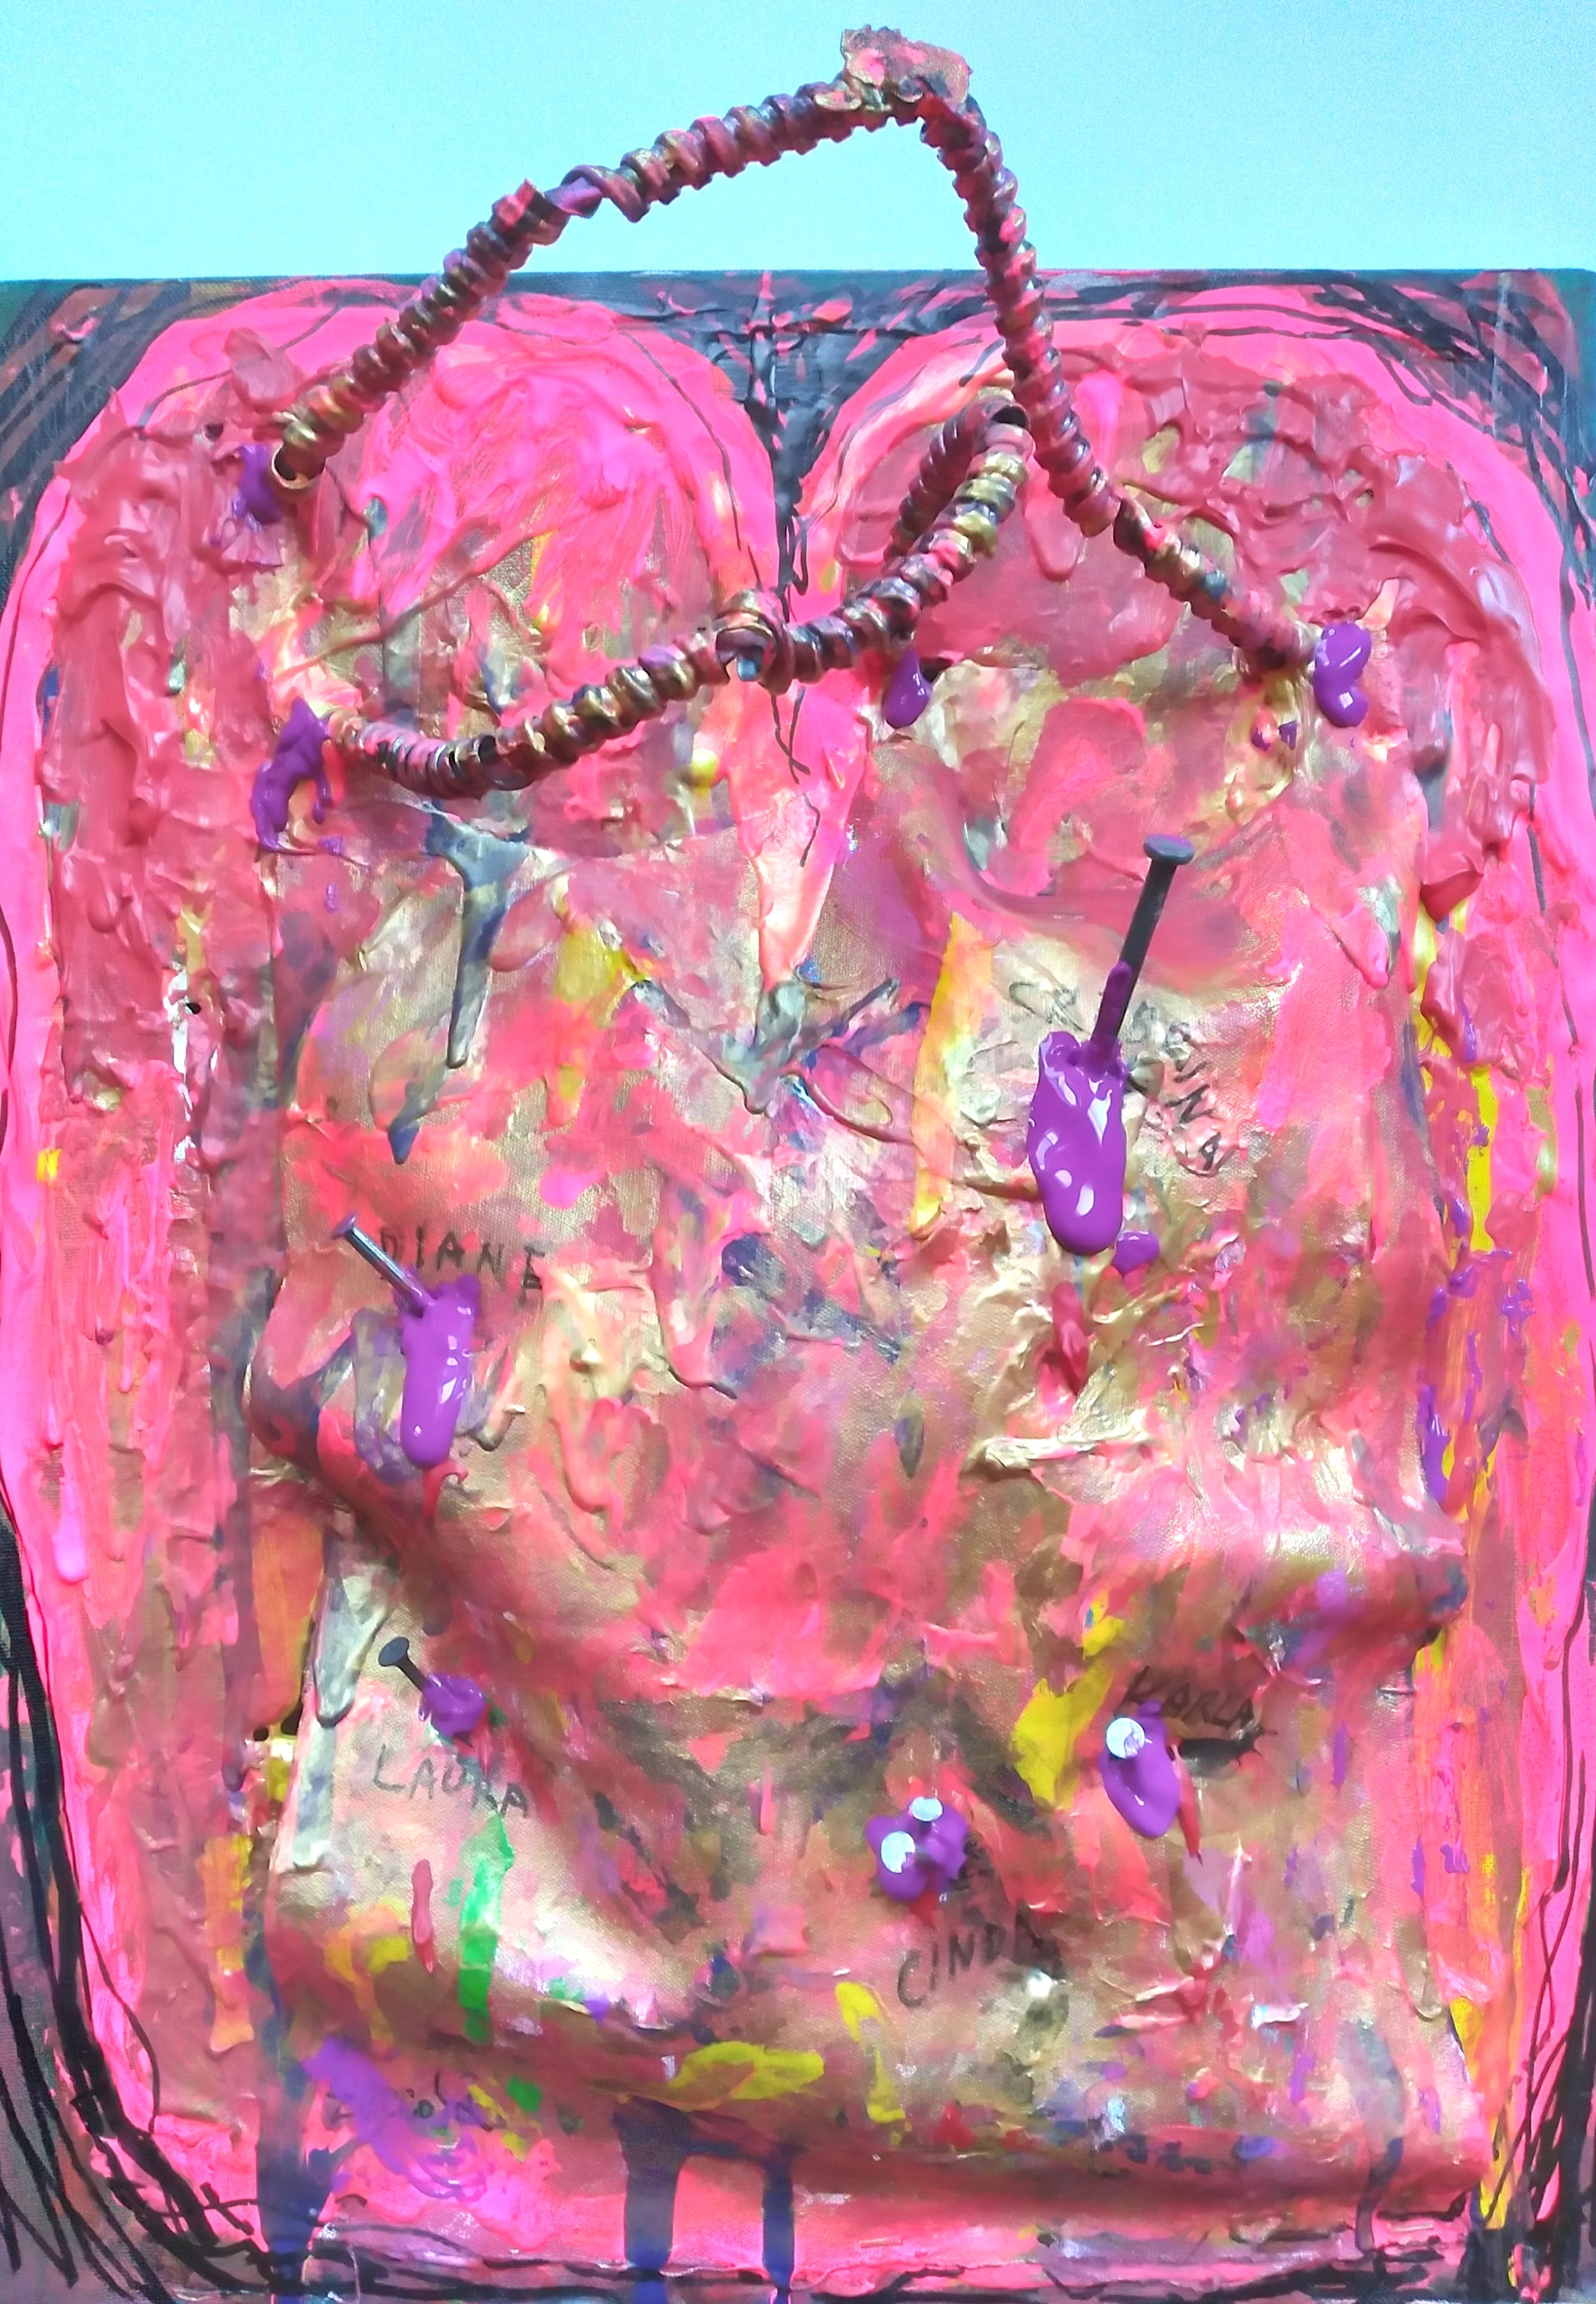 Metal Heart, 2014. Oil, acrylic, mixed media on canvas. 20” x 16”.